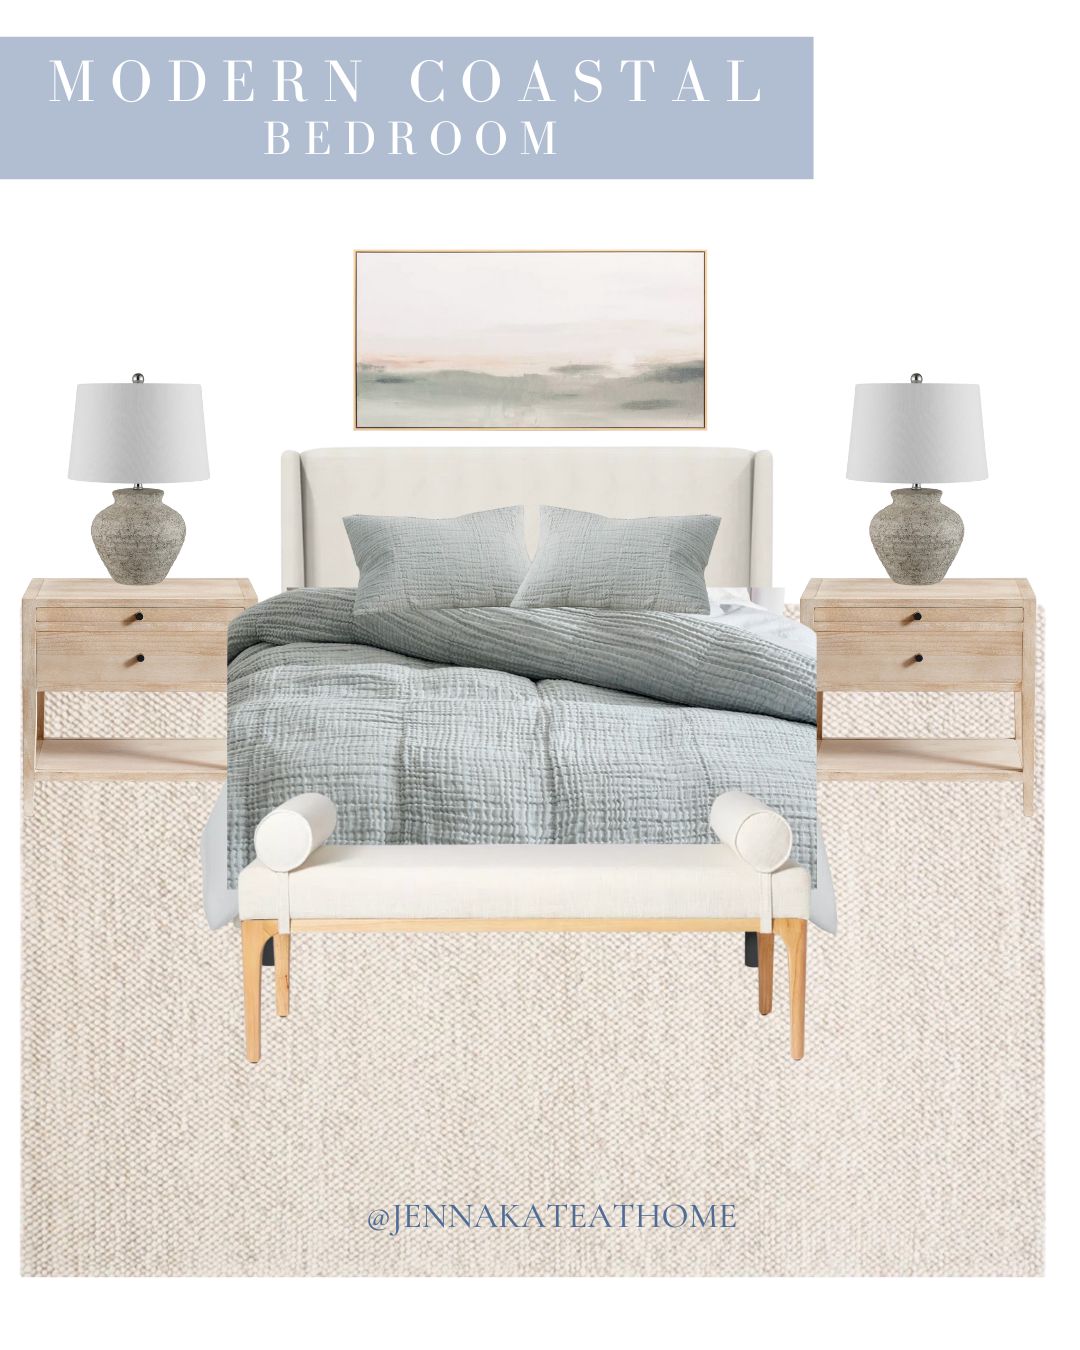 modern coastal bedroom design board